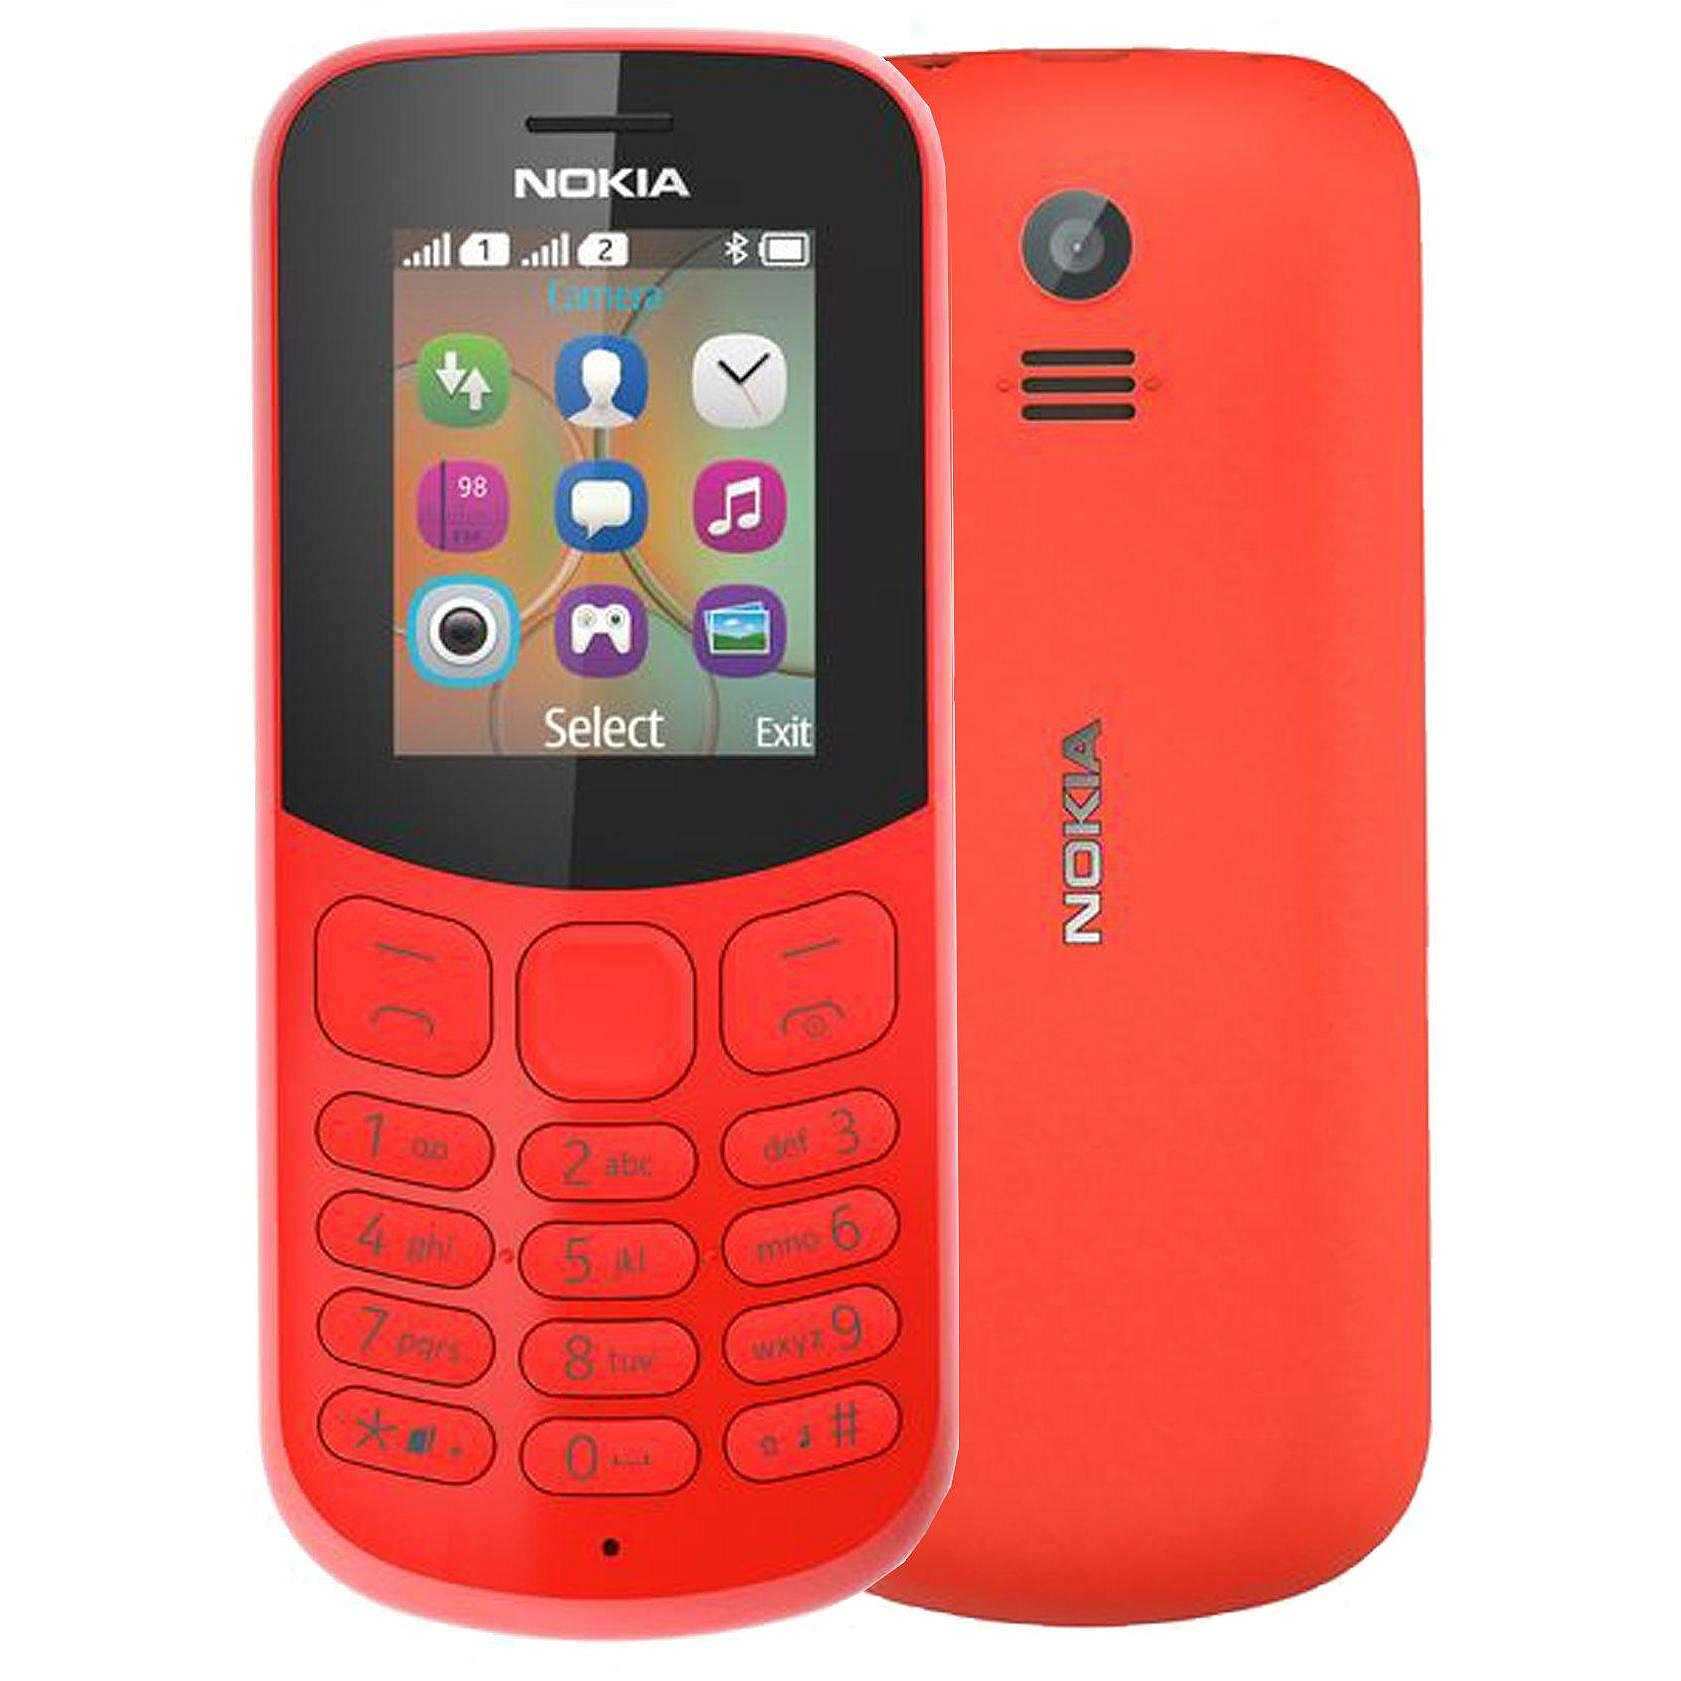 Топики телефон. Nokia 130 DS. Nokia 130 DS ta-1017. Нокиа 130 Dual SIM. Nokia 130 Dual.